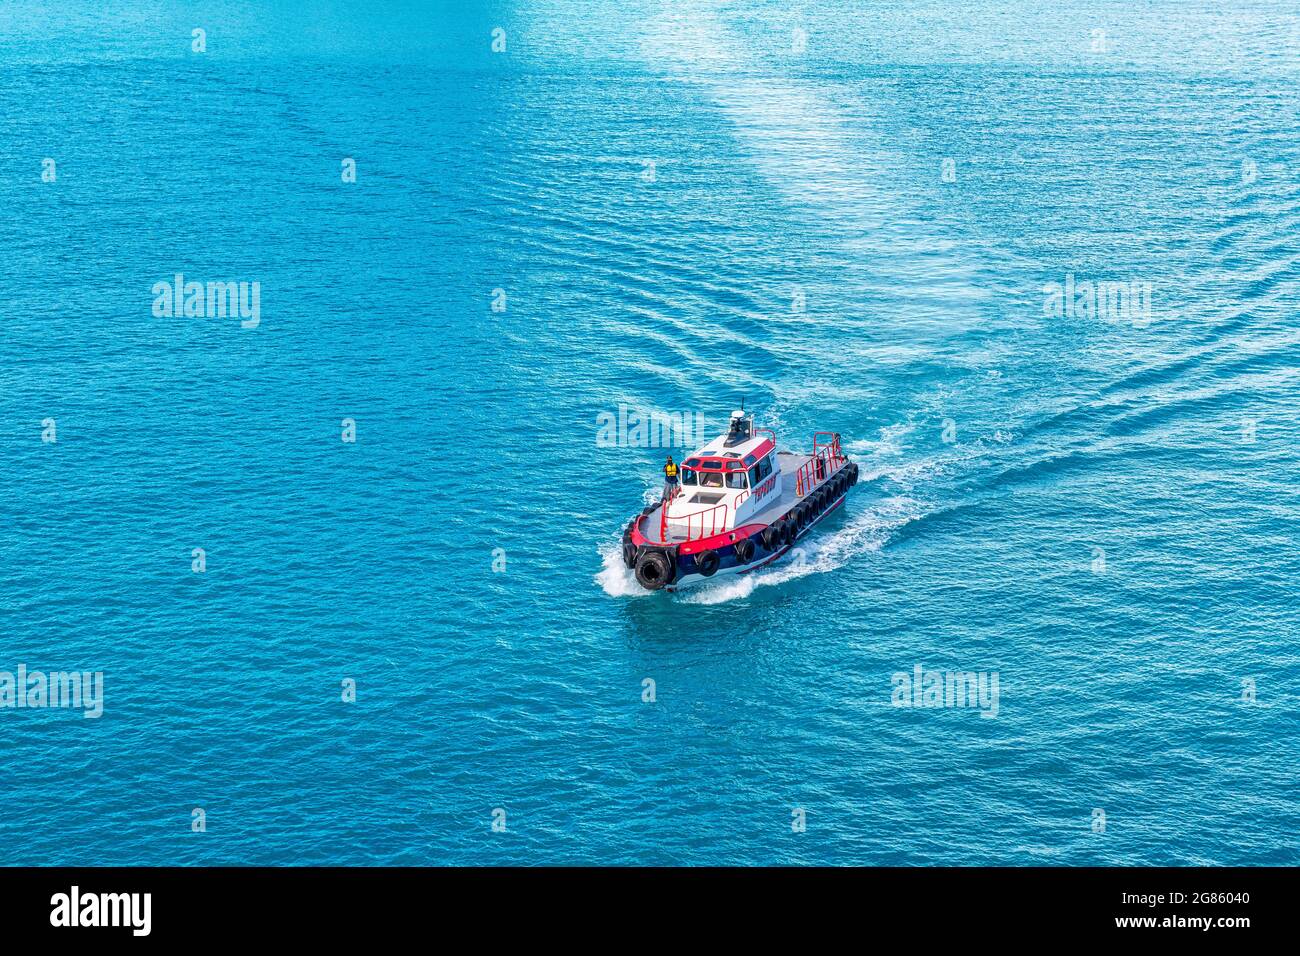 Pilot or guide boat, Freeport, Bahamas Stock Photo